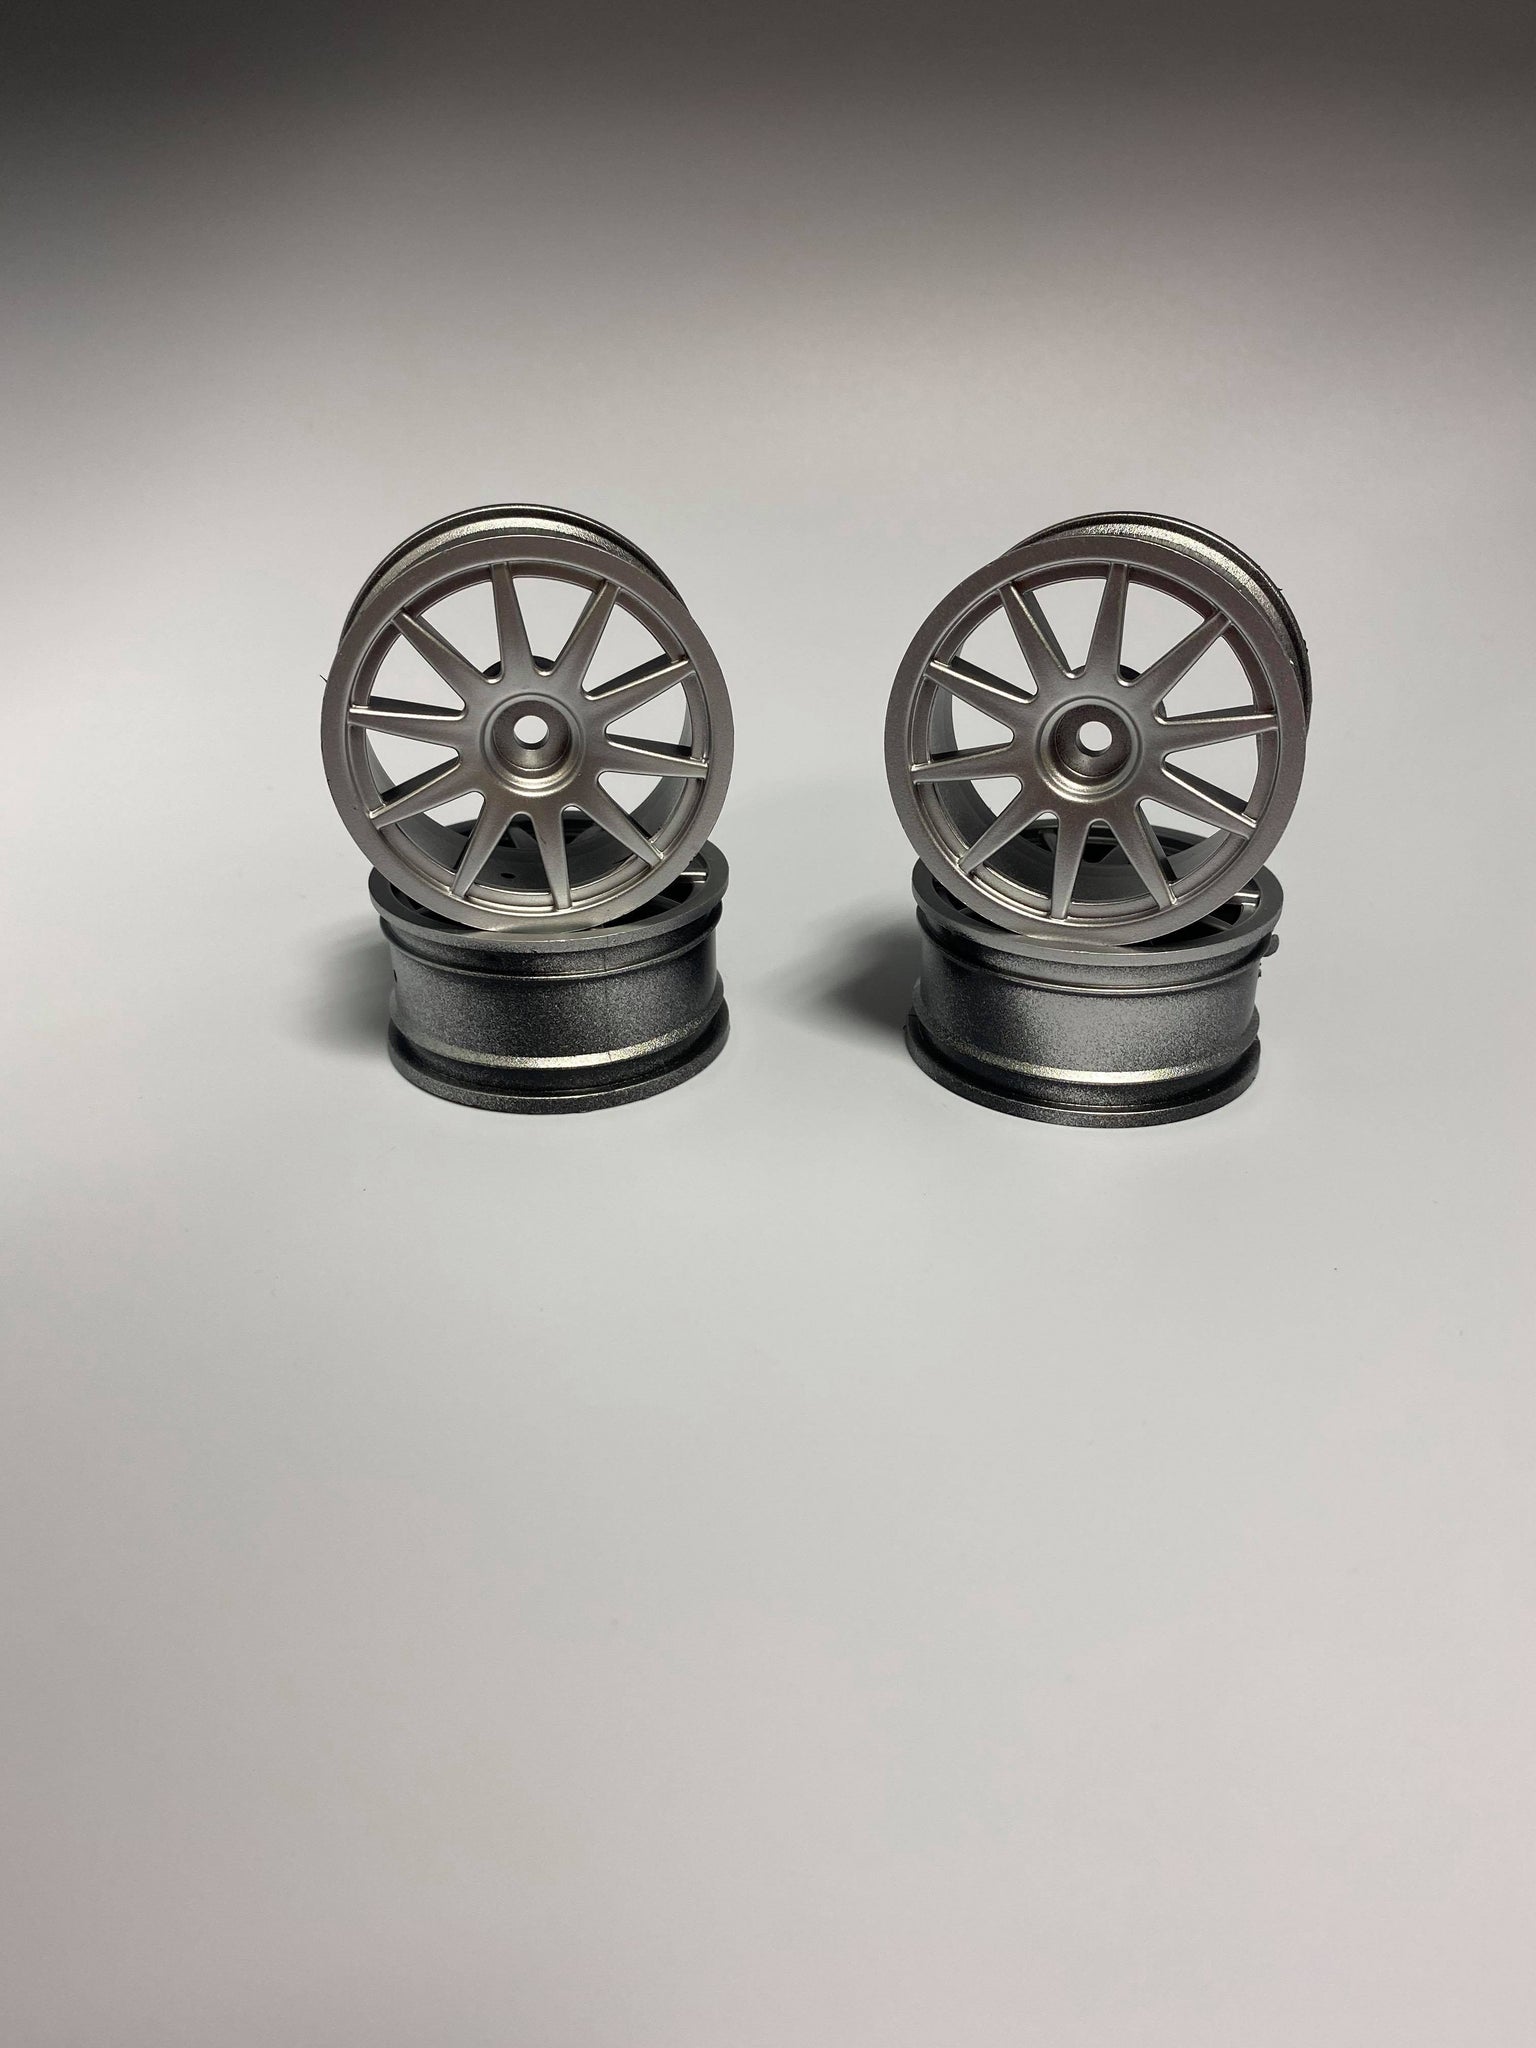 26mm 6mm offset silver spoke wheels 12mm hex (4pcs) LL11